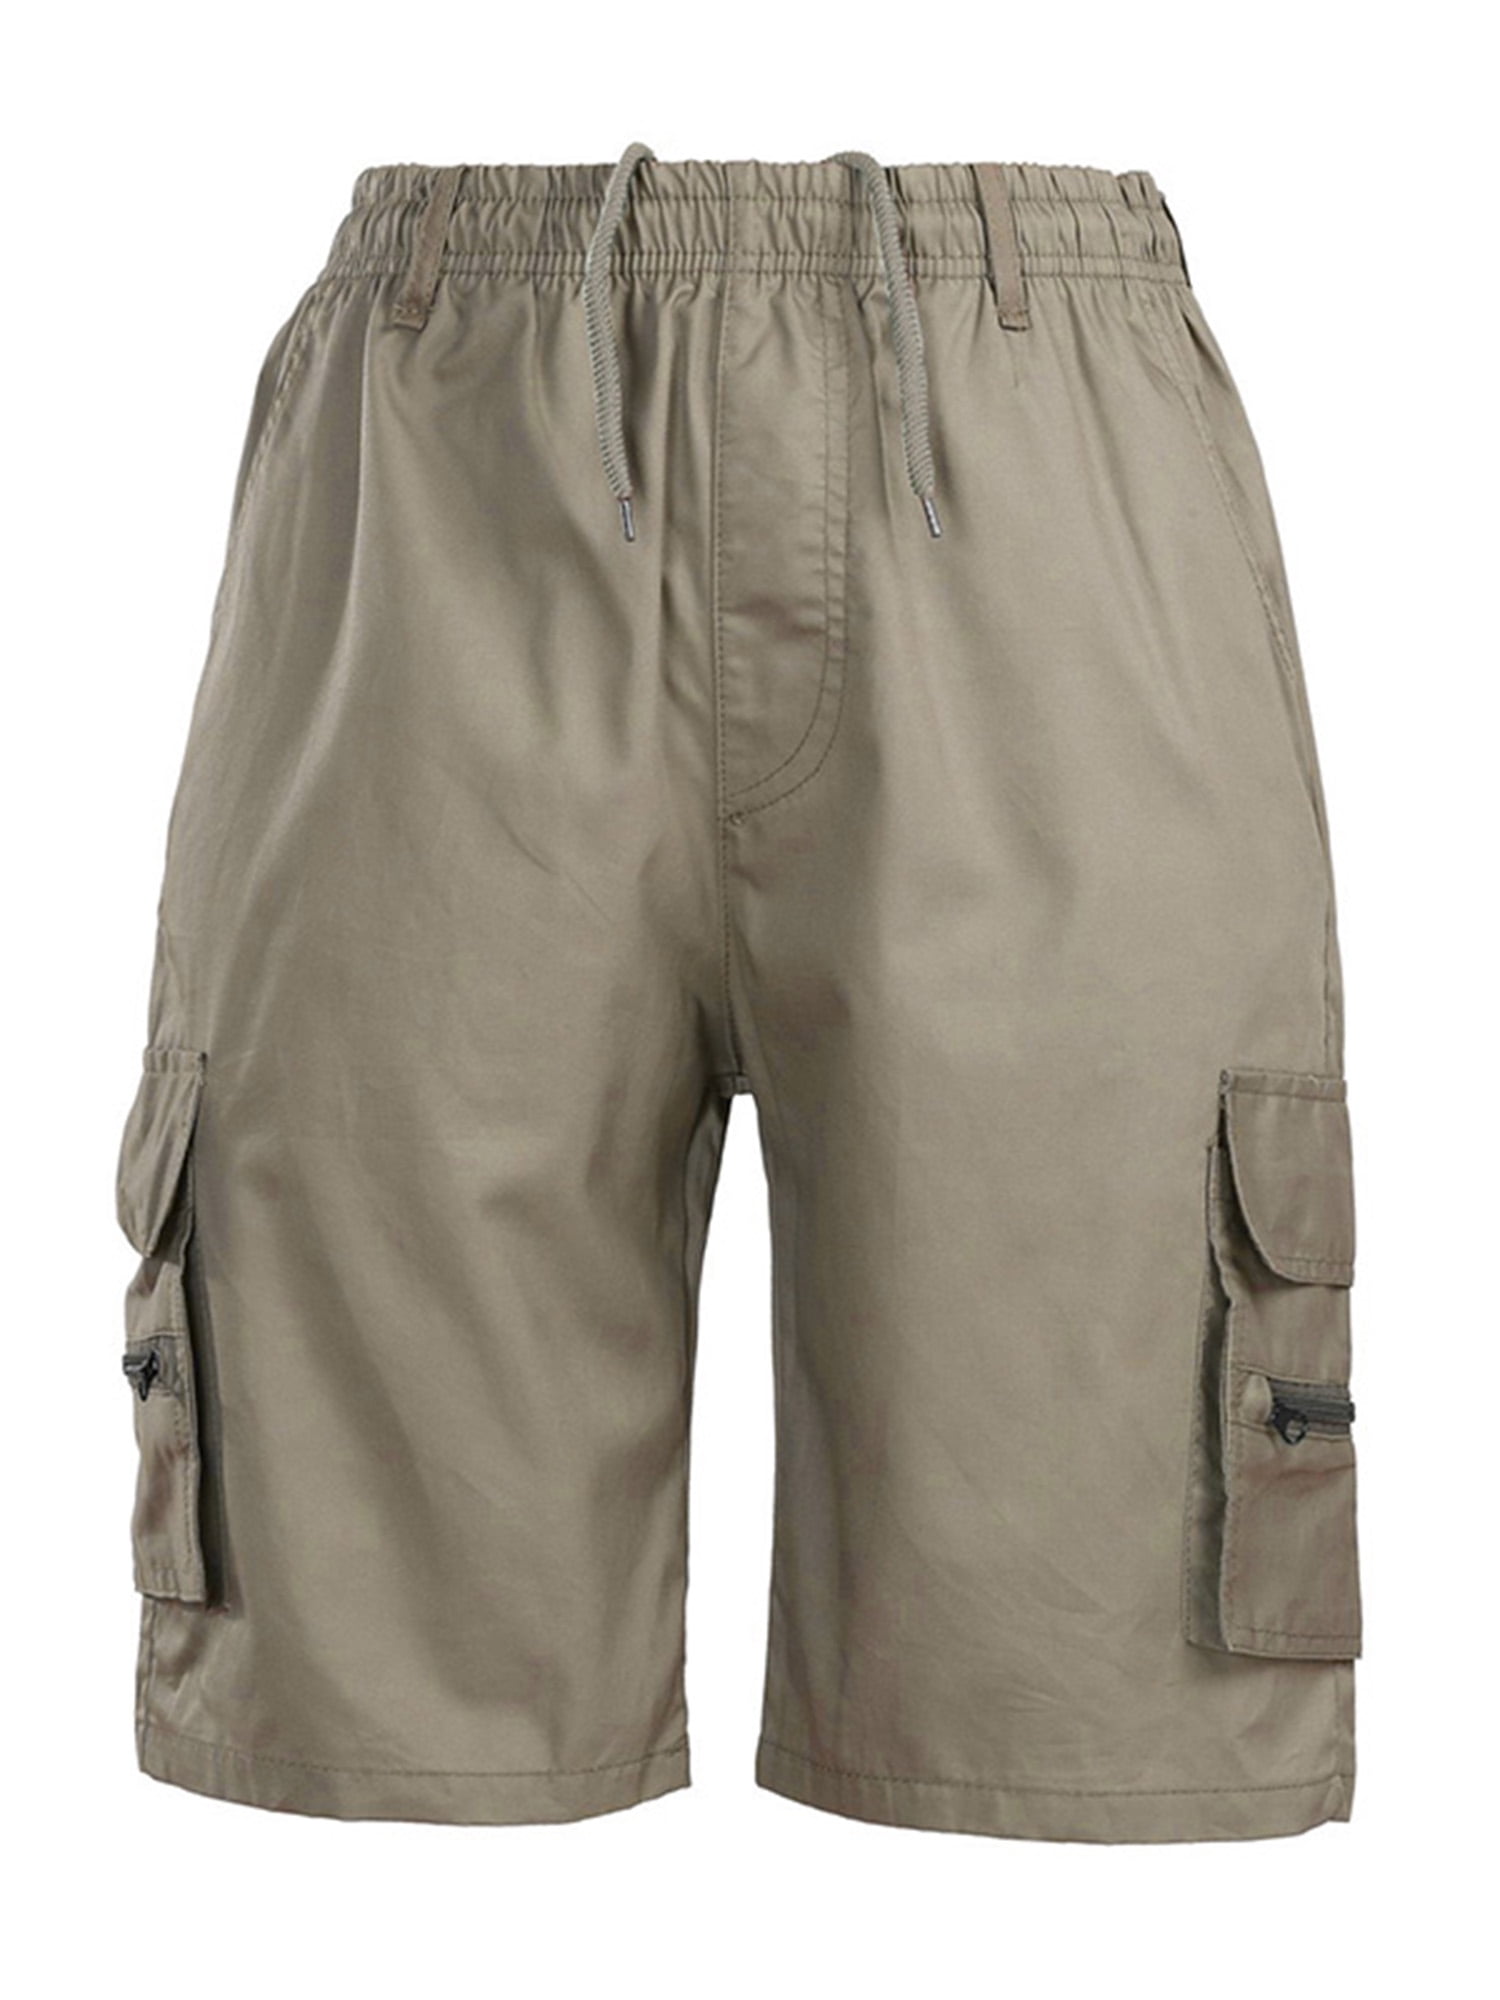 Mens Multi Pocket Casual Shorts Cotton Twill Cargo Short for Hiking Fishing 